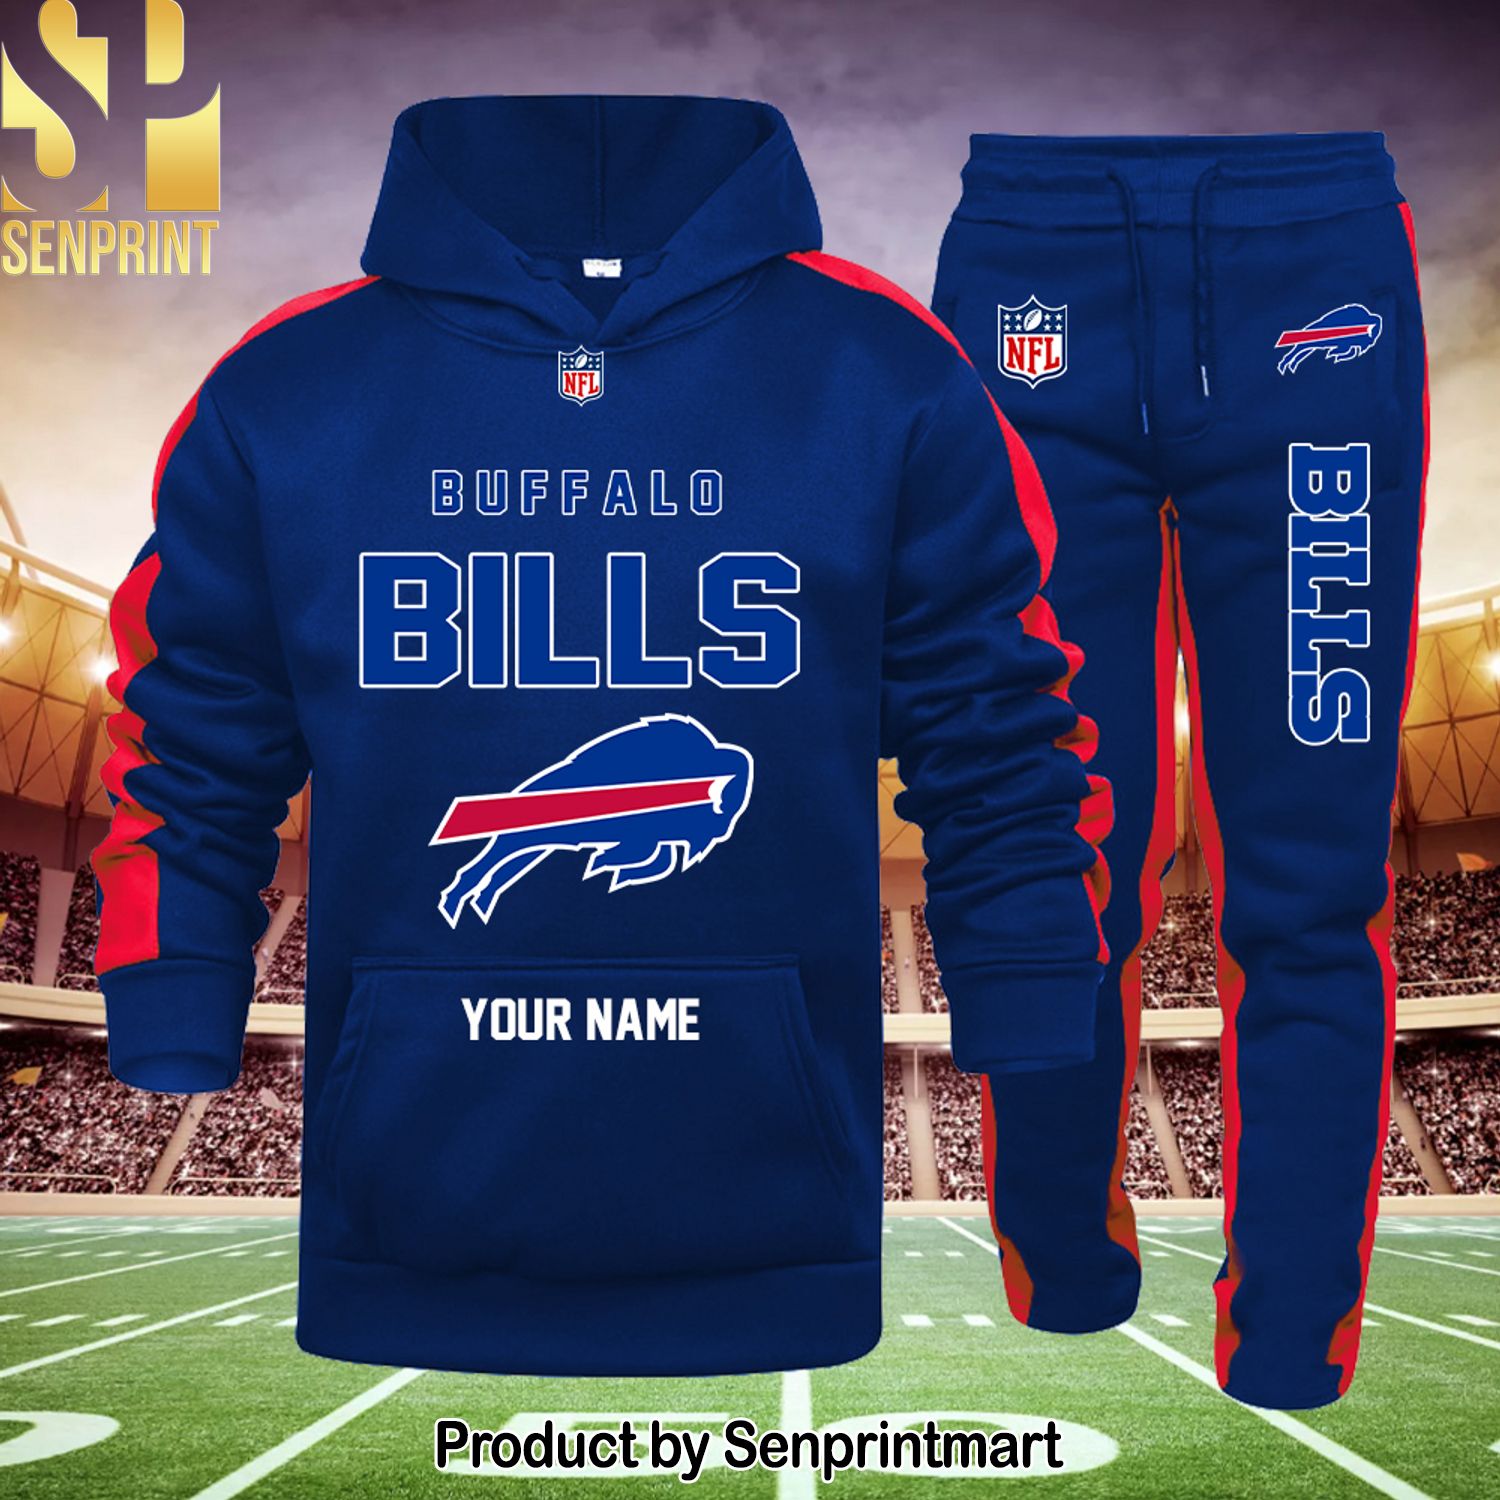 NFL Buffalo Bills New Outfit Shirt and Sweatpants